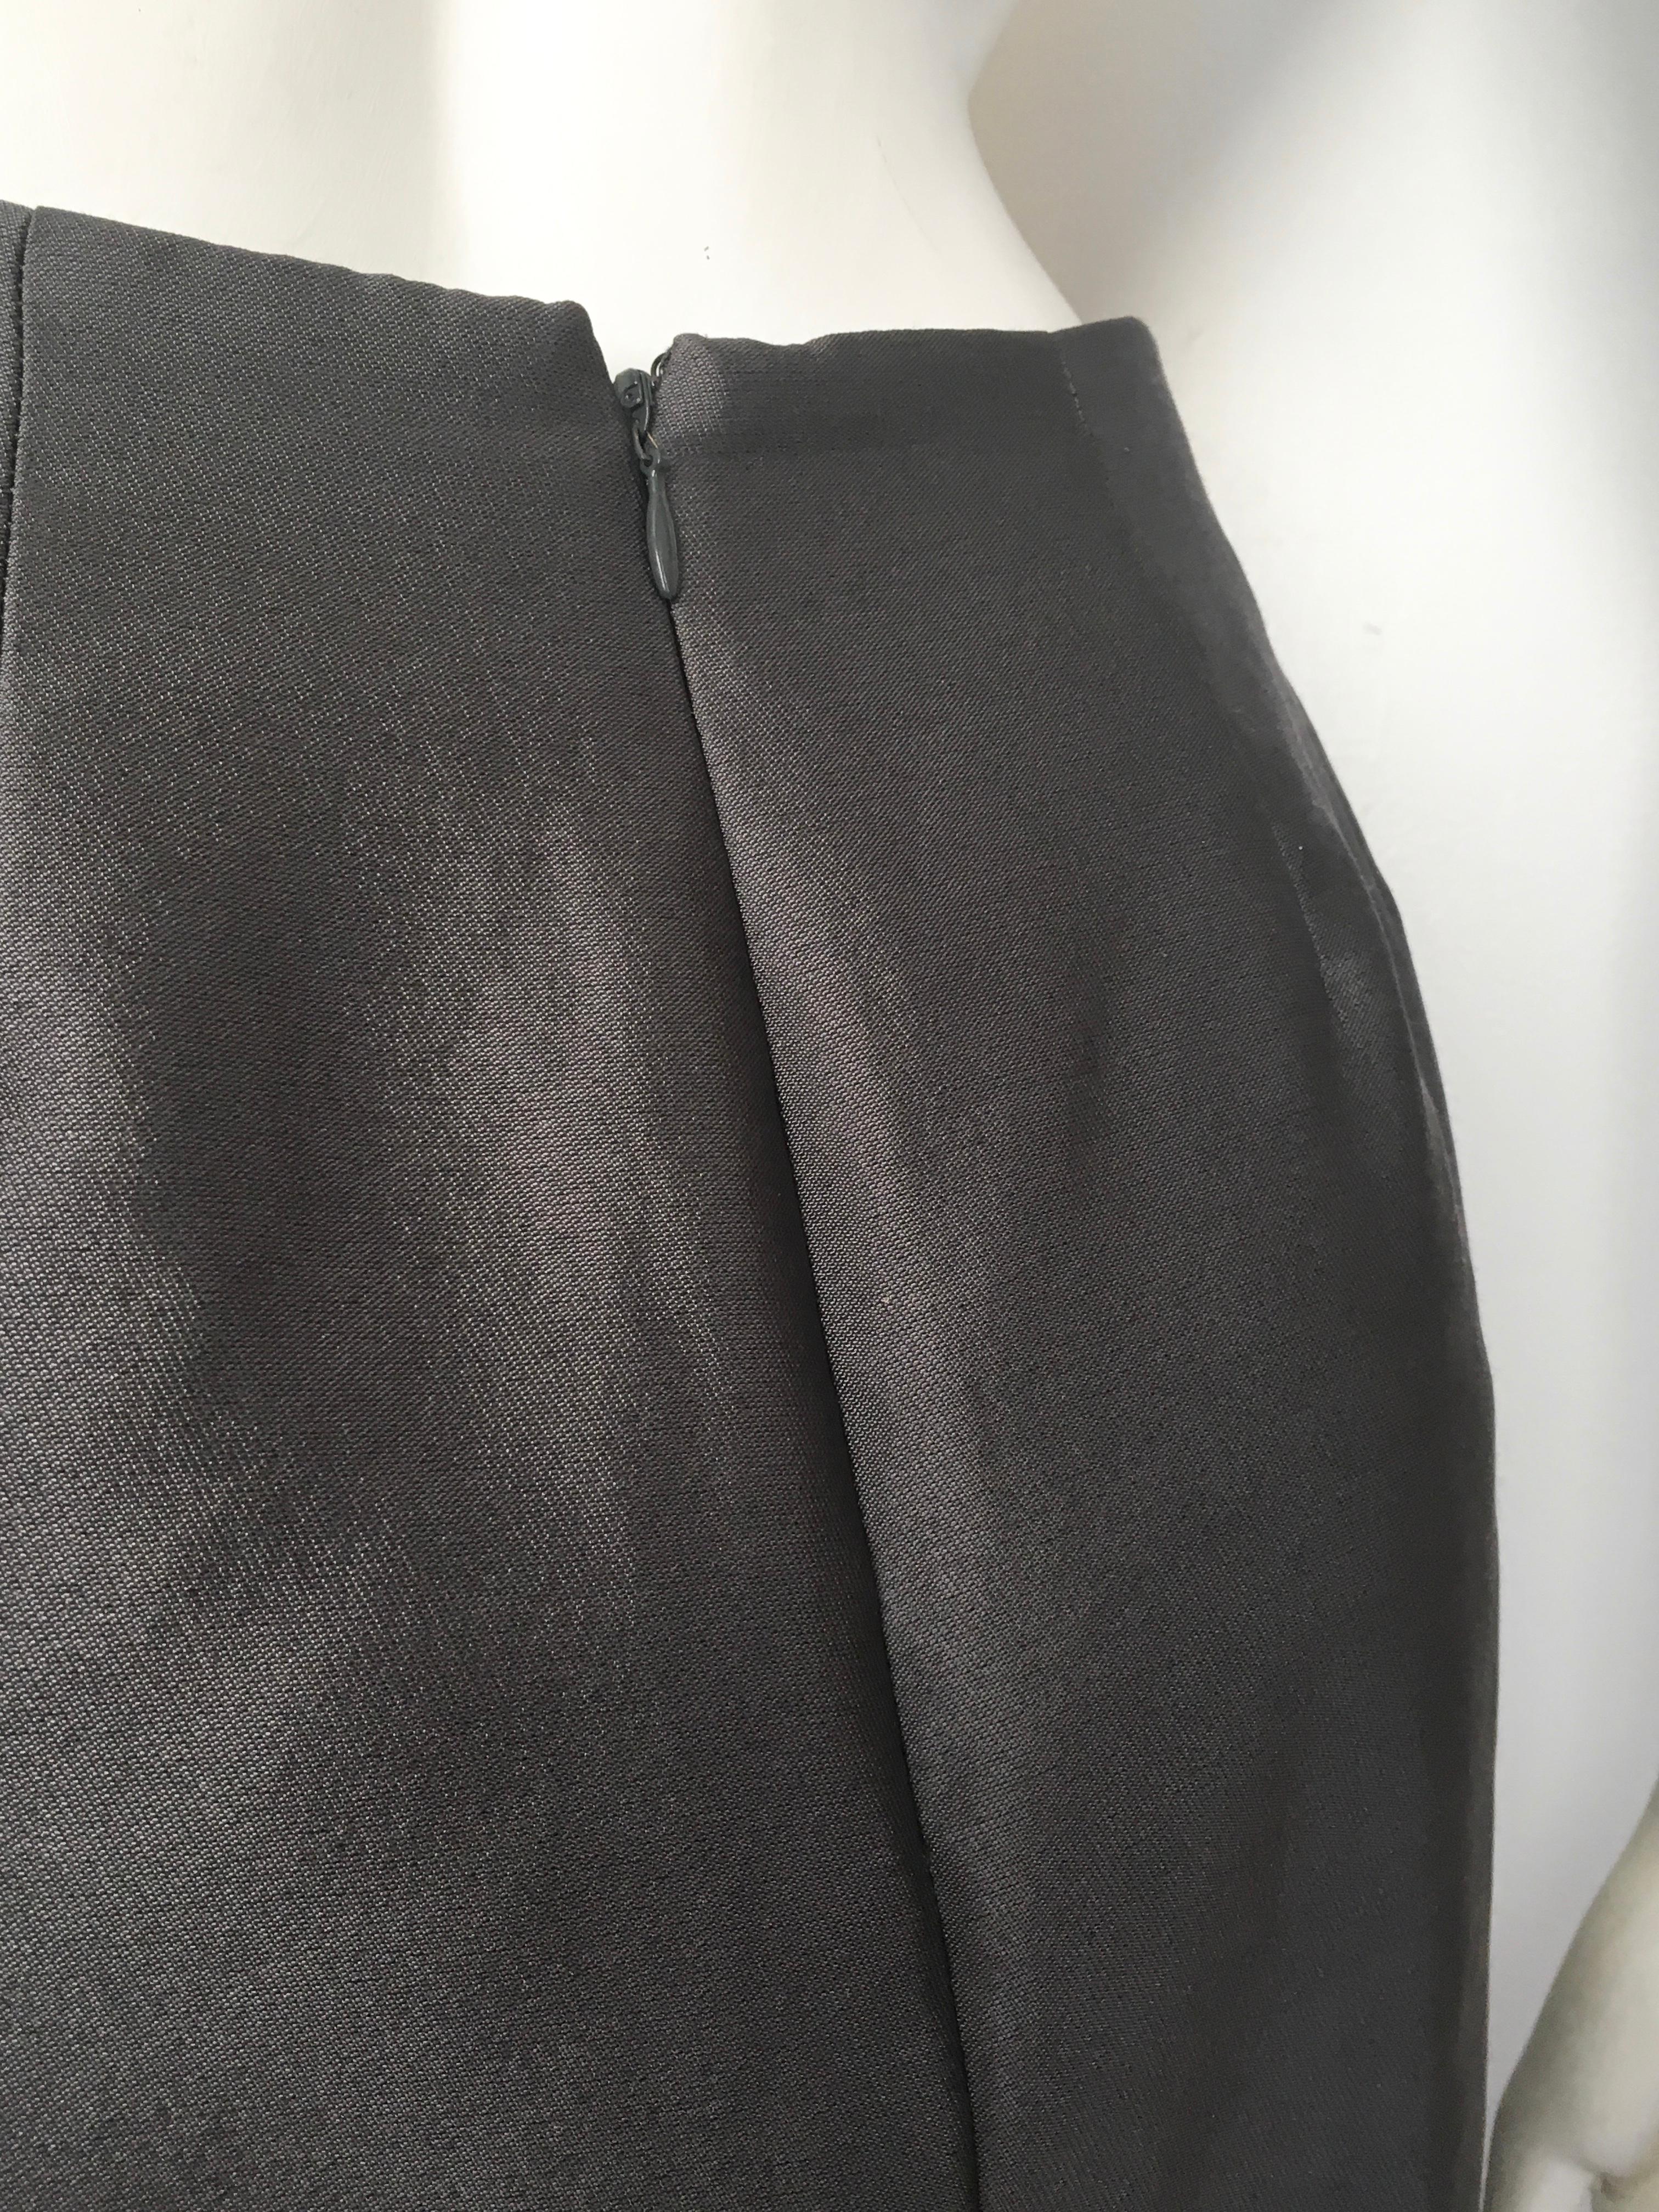 Donna Karan for Bergdorf Goodman 1990s Gray Silk Long Skirt Size 4. For Sale 4